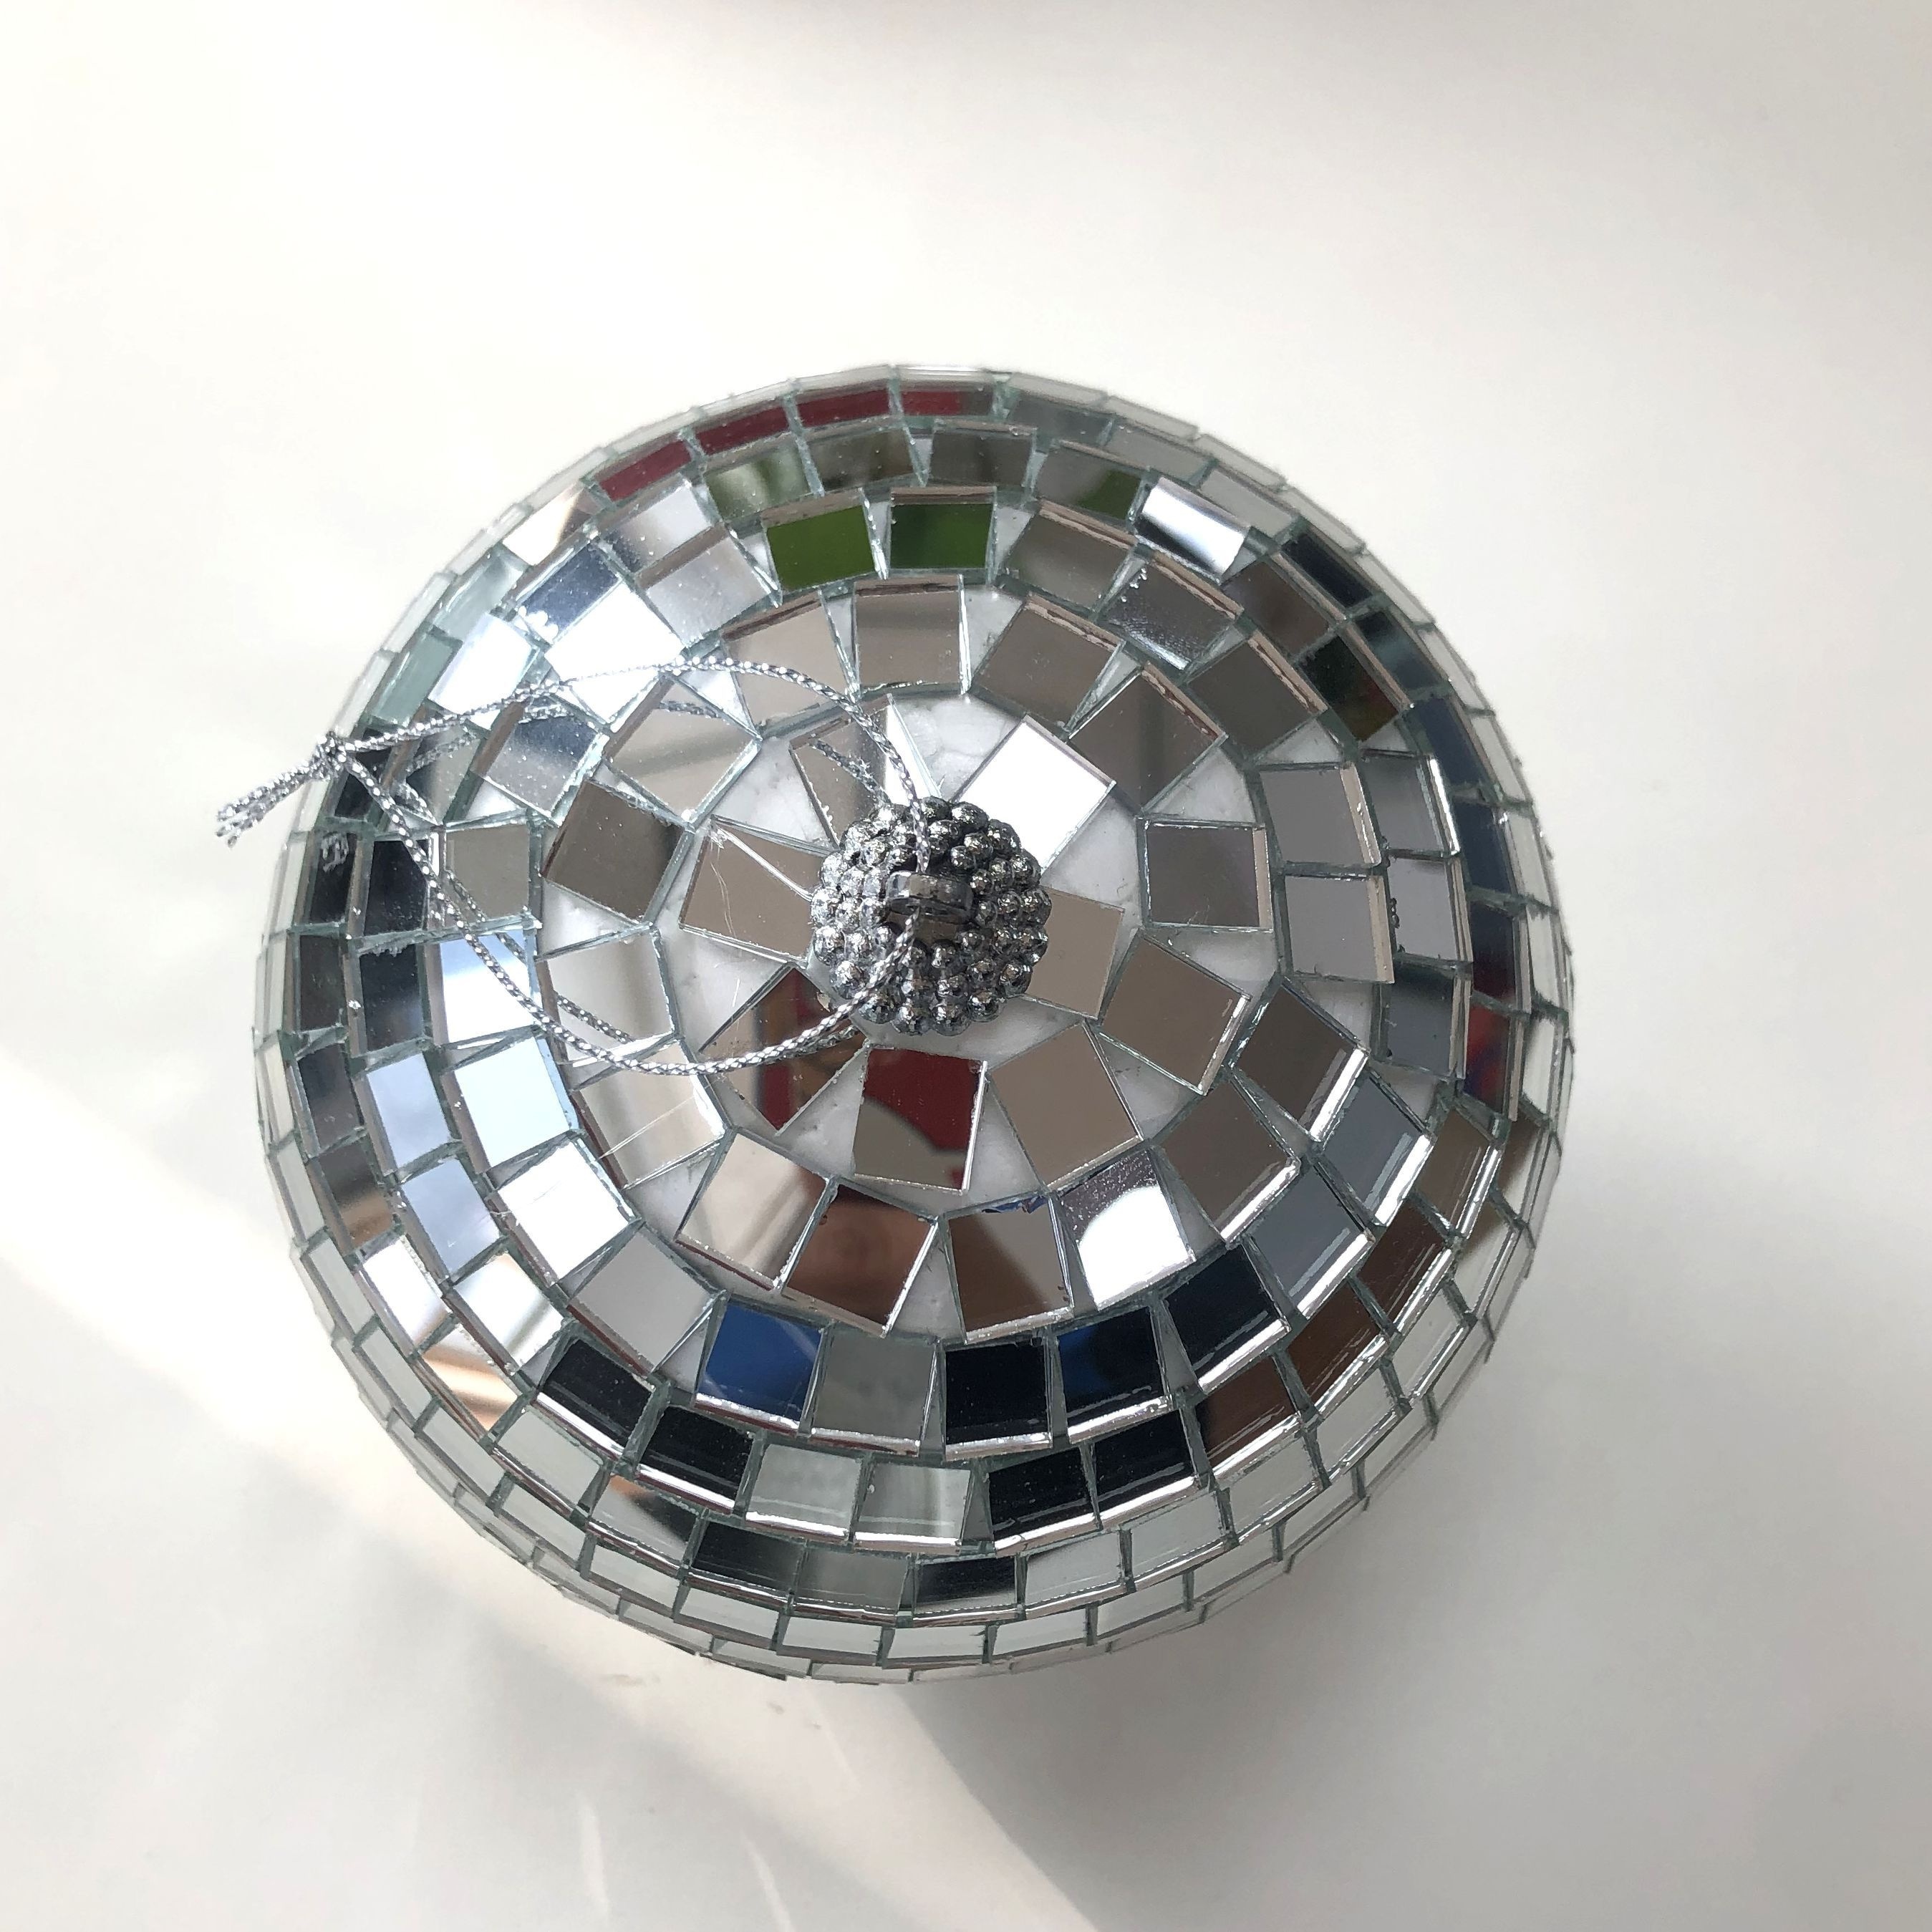 2pcs/box 3.54inch Glass Mirror Ball Ornament, Home Decoration